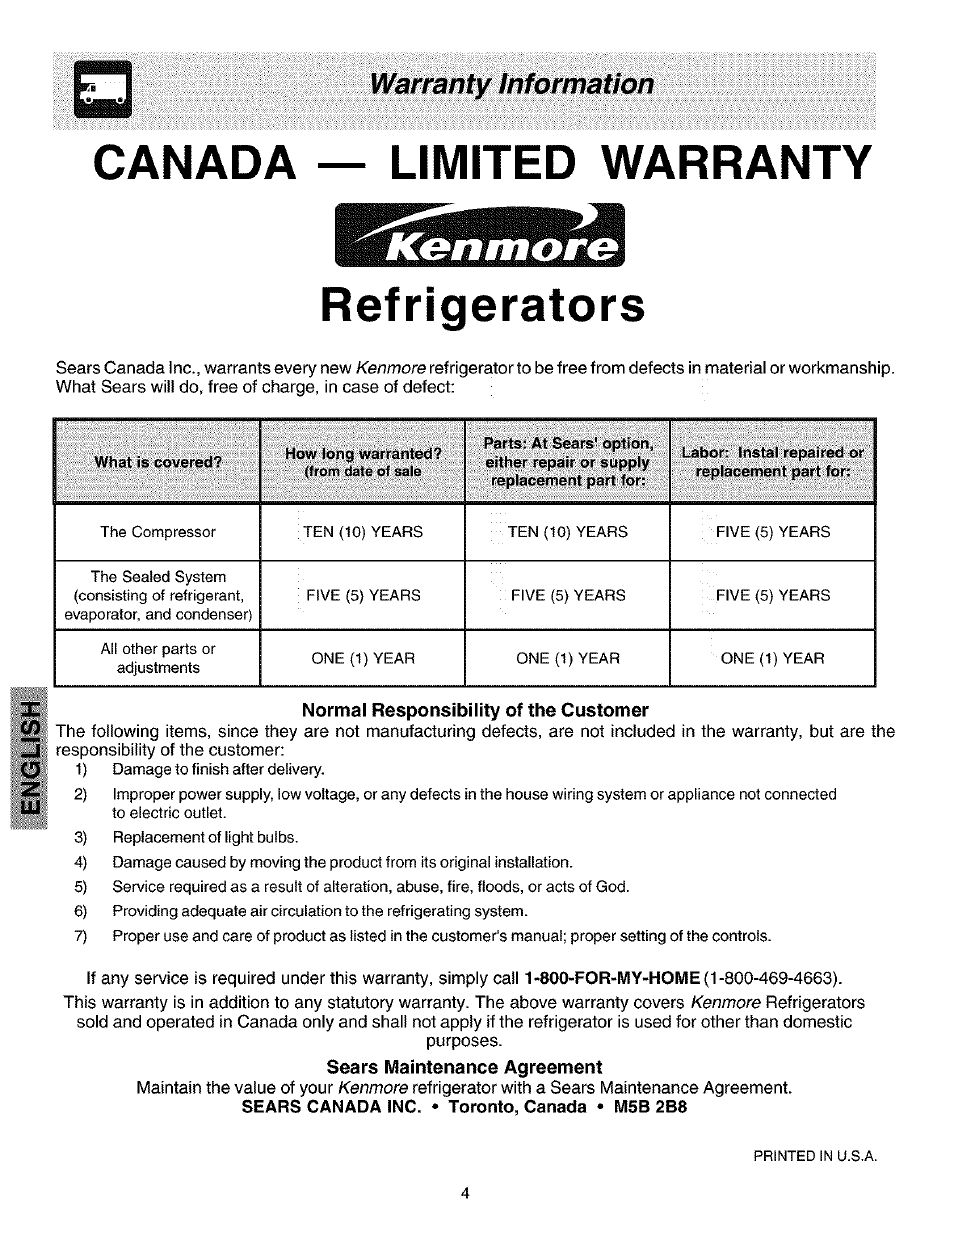 Sears maintenance agreement, Canada, Limited warranty | Refrigerators, Ken more, Warranty information | Kenmore 25351399106 User Manual | Page 4 / 25